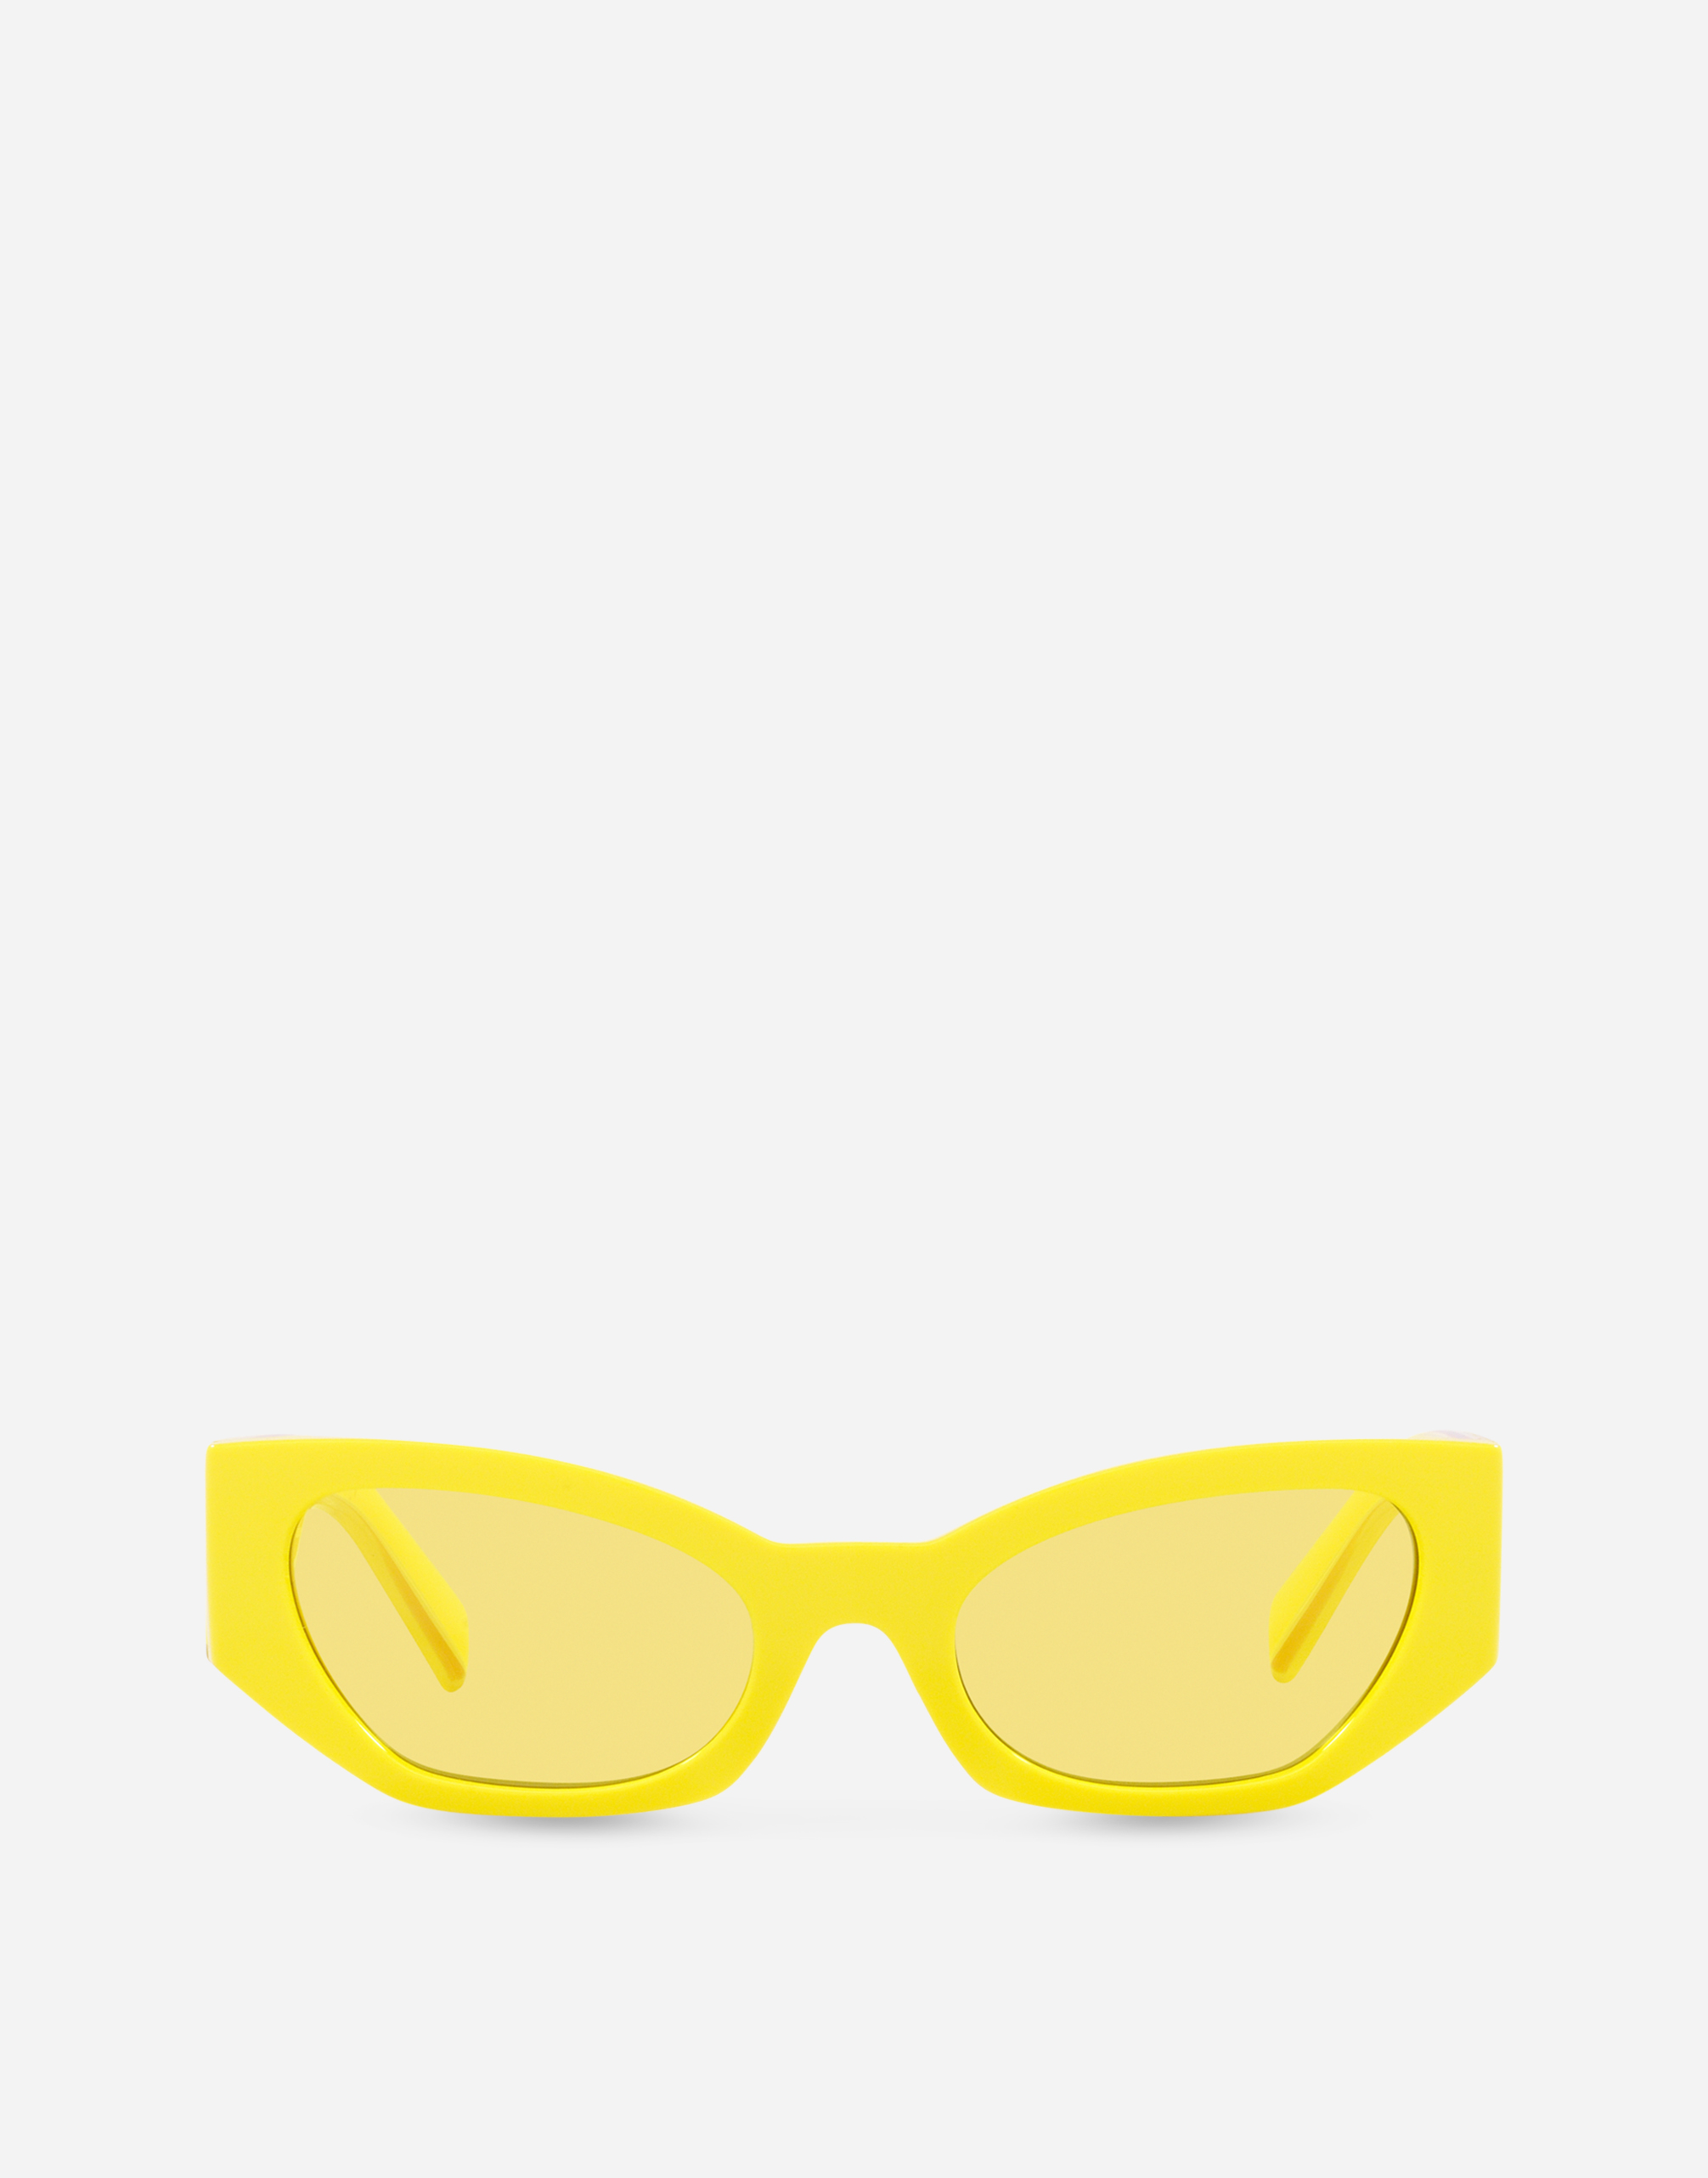 DG Elastic Sunglasses in Yellow